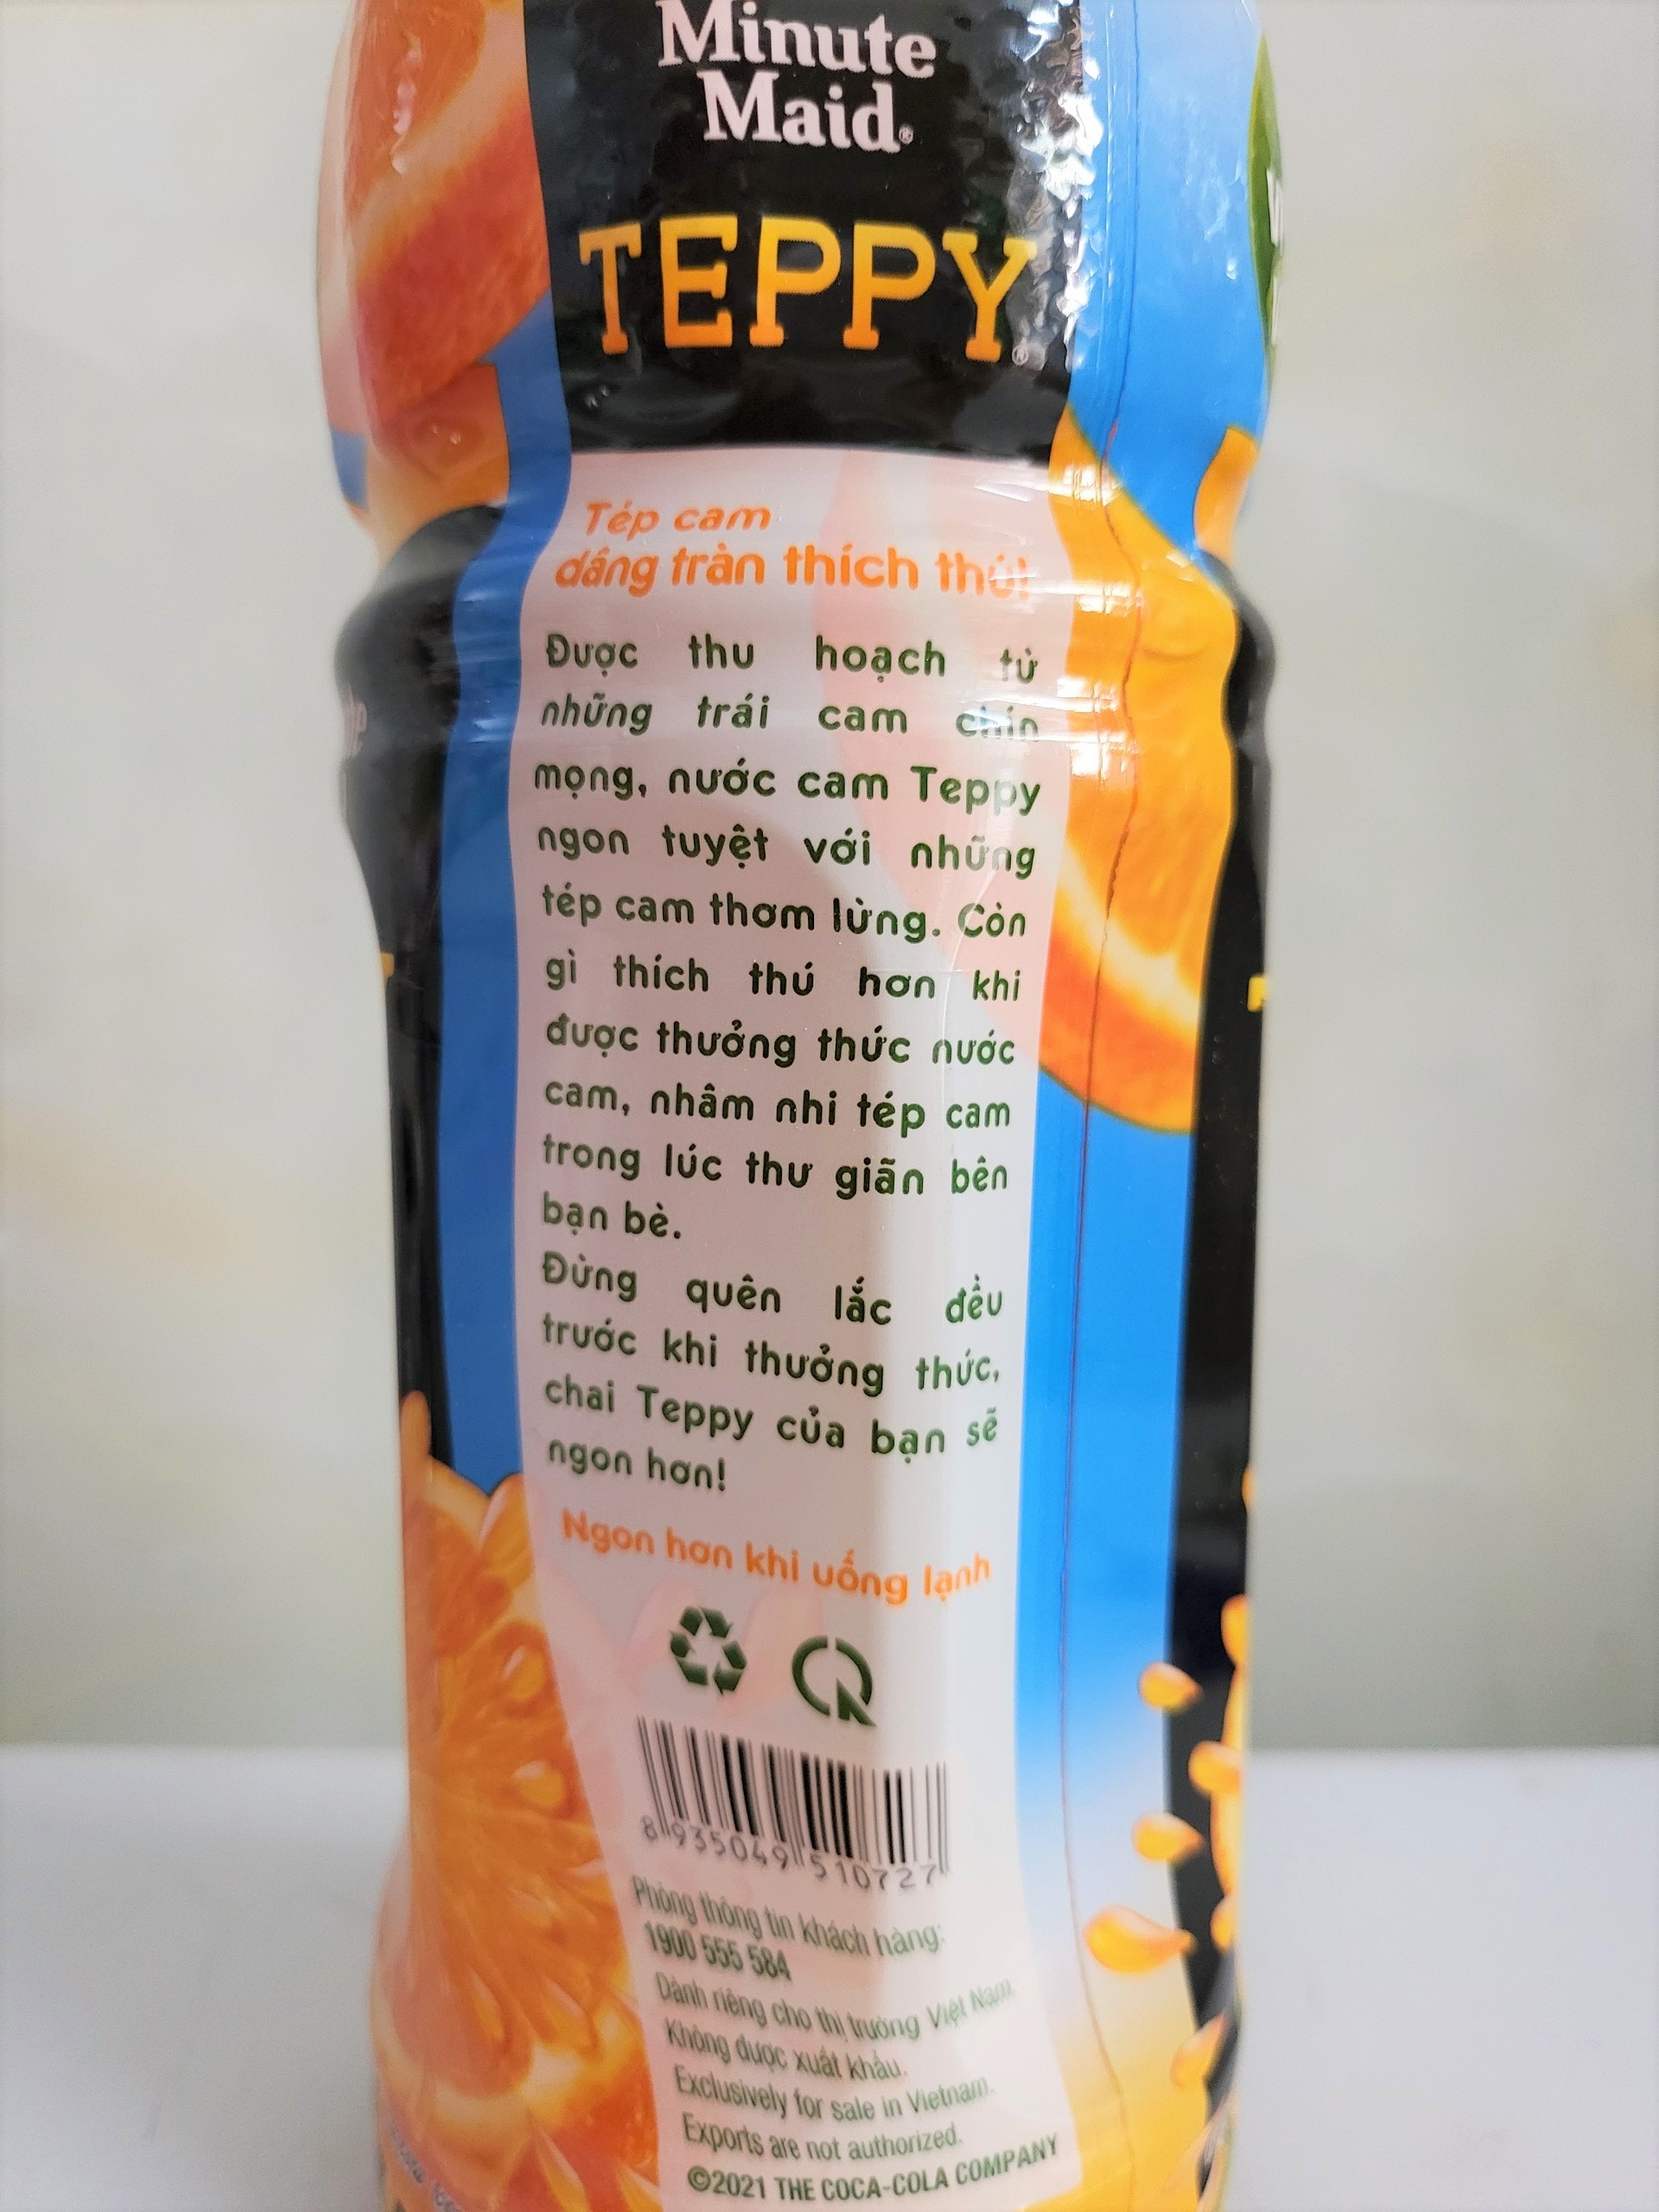 [Chai 1 Lít] NƯỚC CAM CÓ TÉP [VN] TEPPY Orange Juice Drink with Orange Pulps